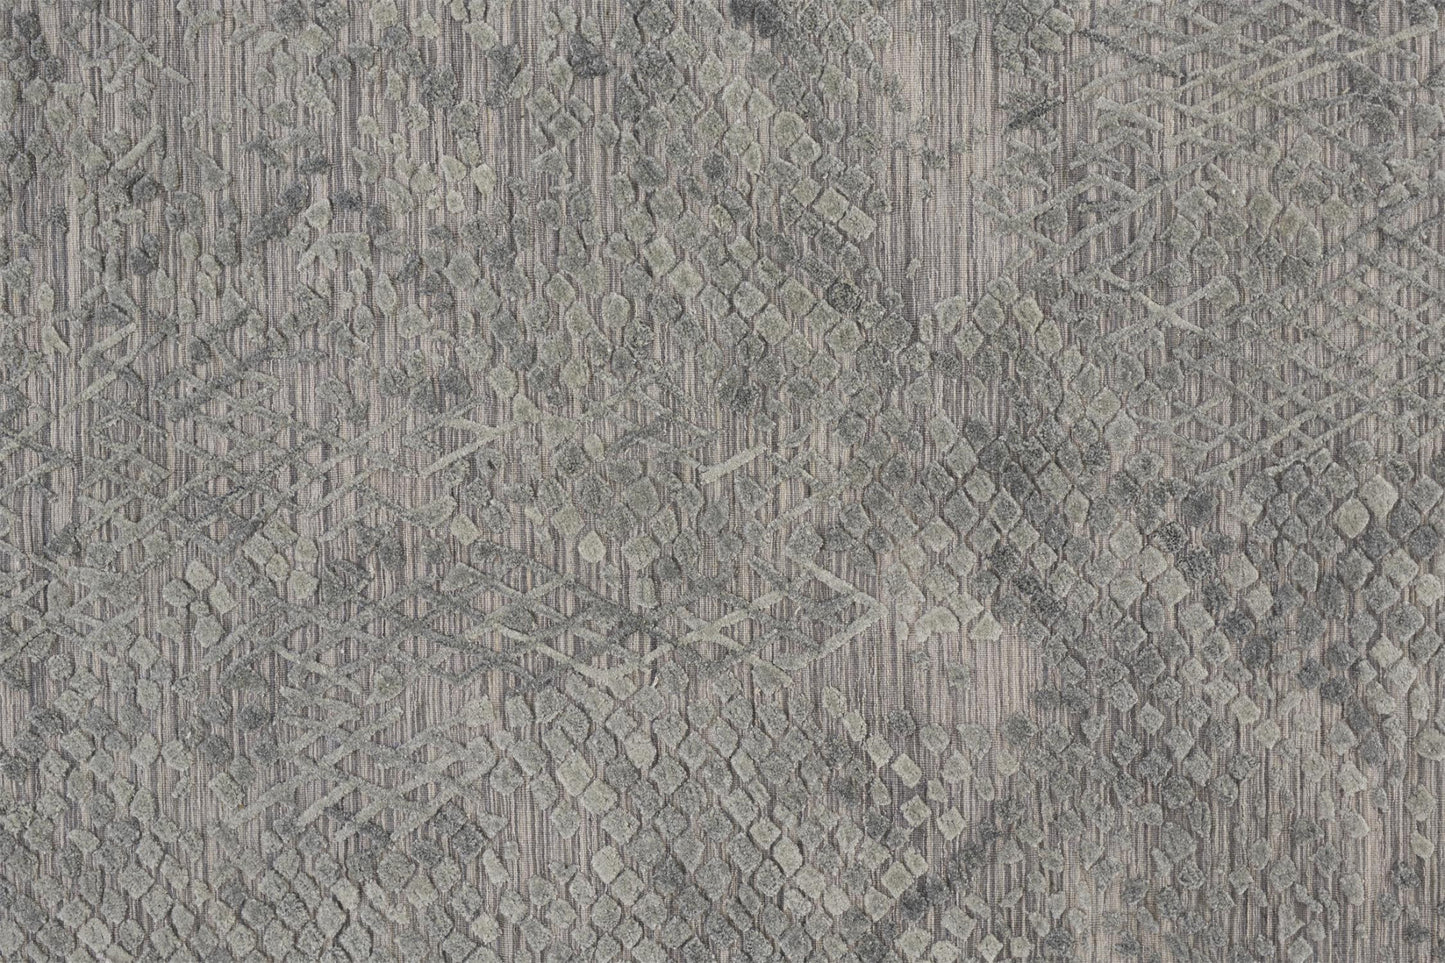 4' X 6' Gray Abstract Hand Woven Area Rug